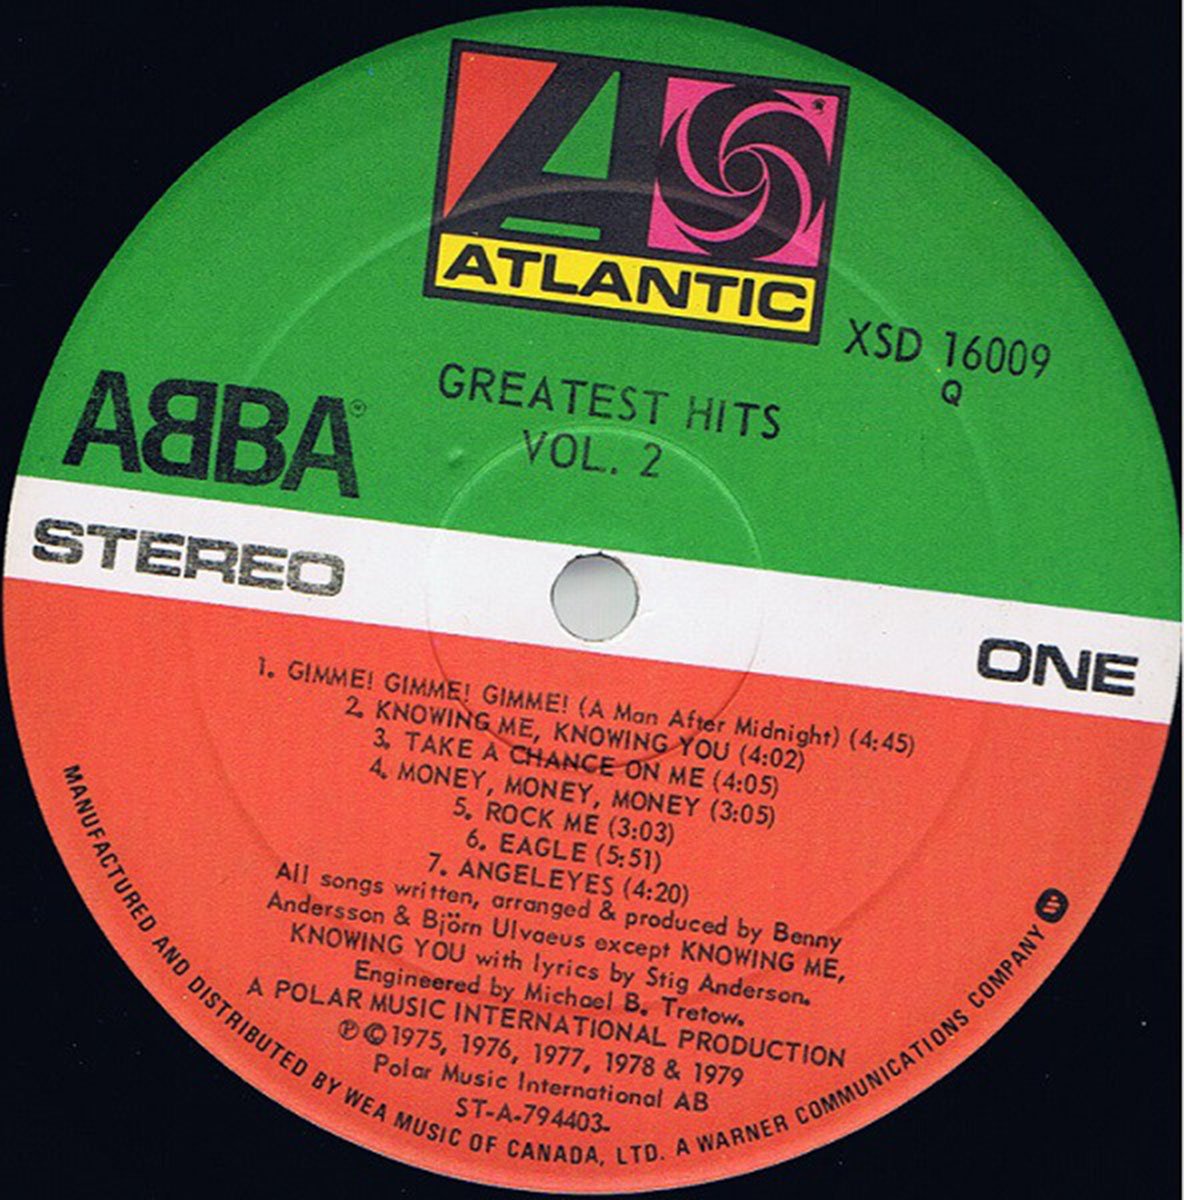 ABBA – Greatest Hits Vol. 2